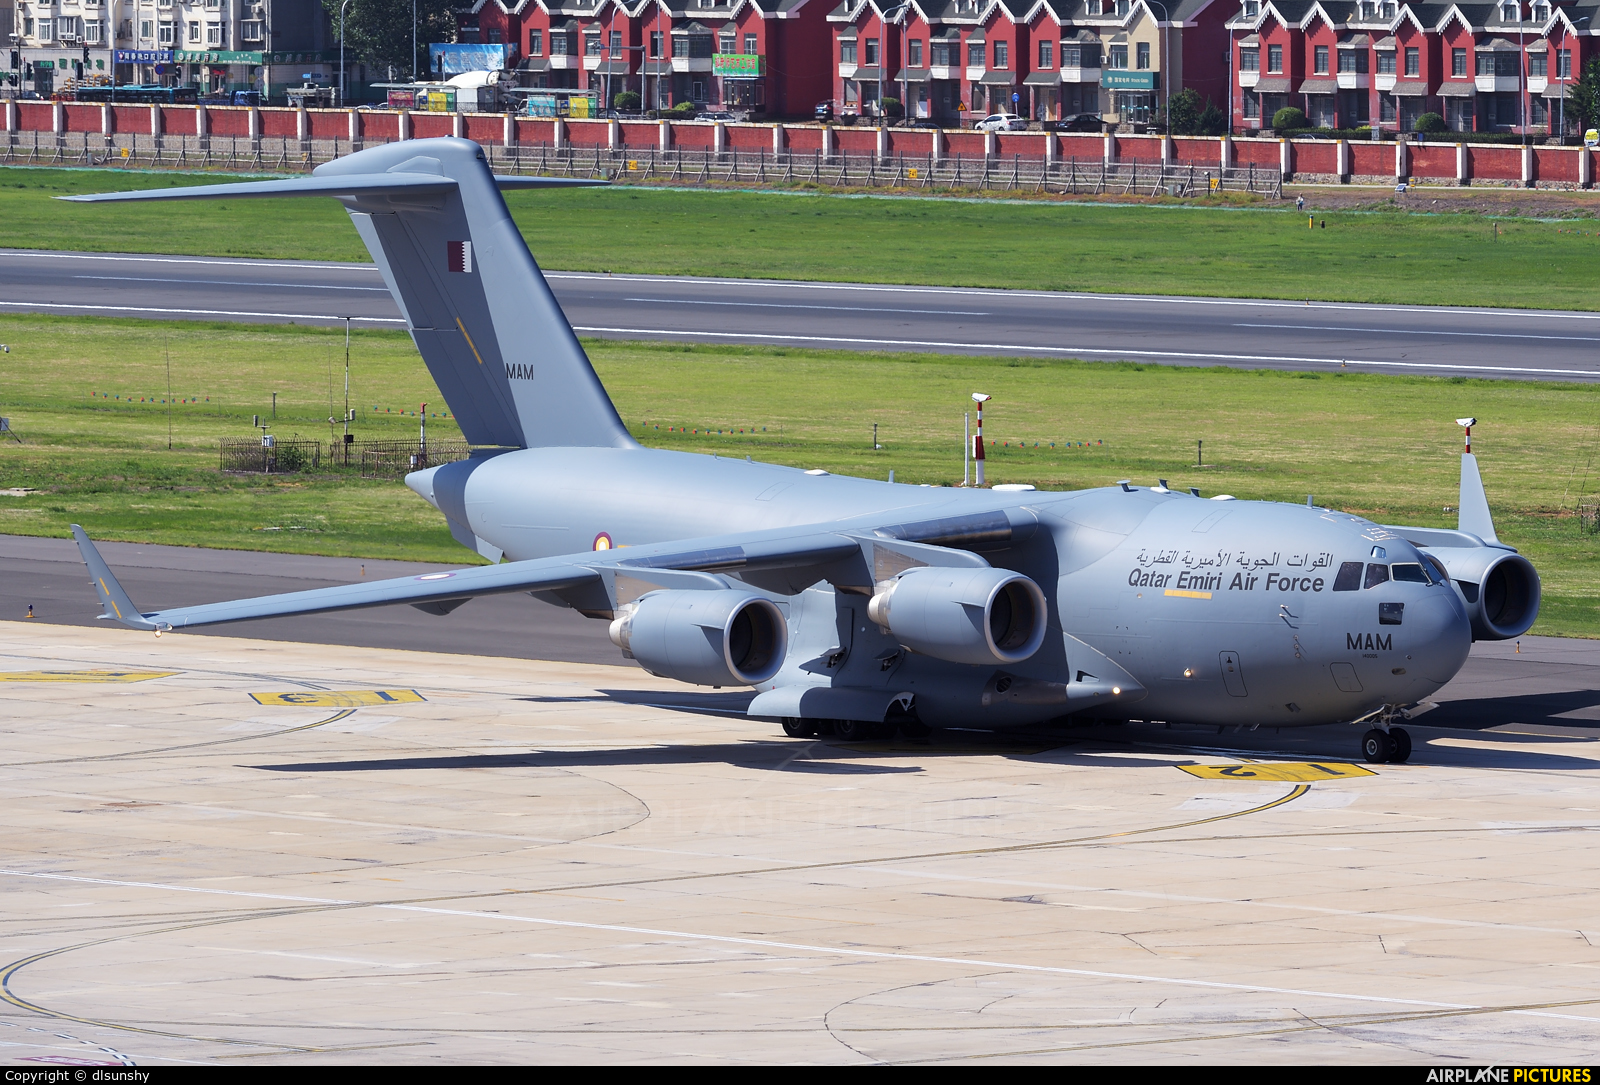 Qatar Amiri - Air Force MAM aircraft at Dalian Zhoushuizi Int'l